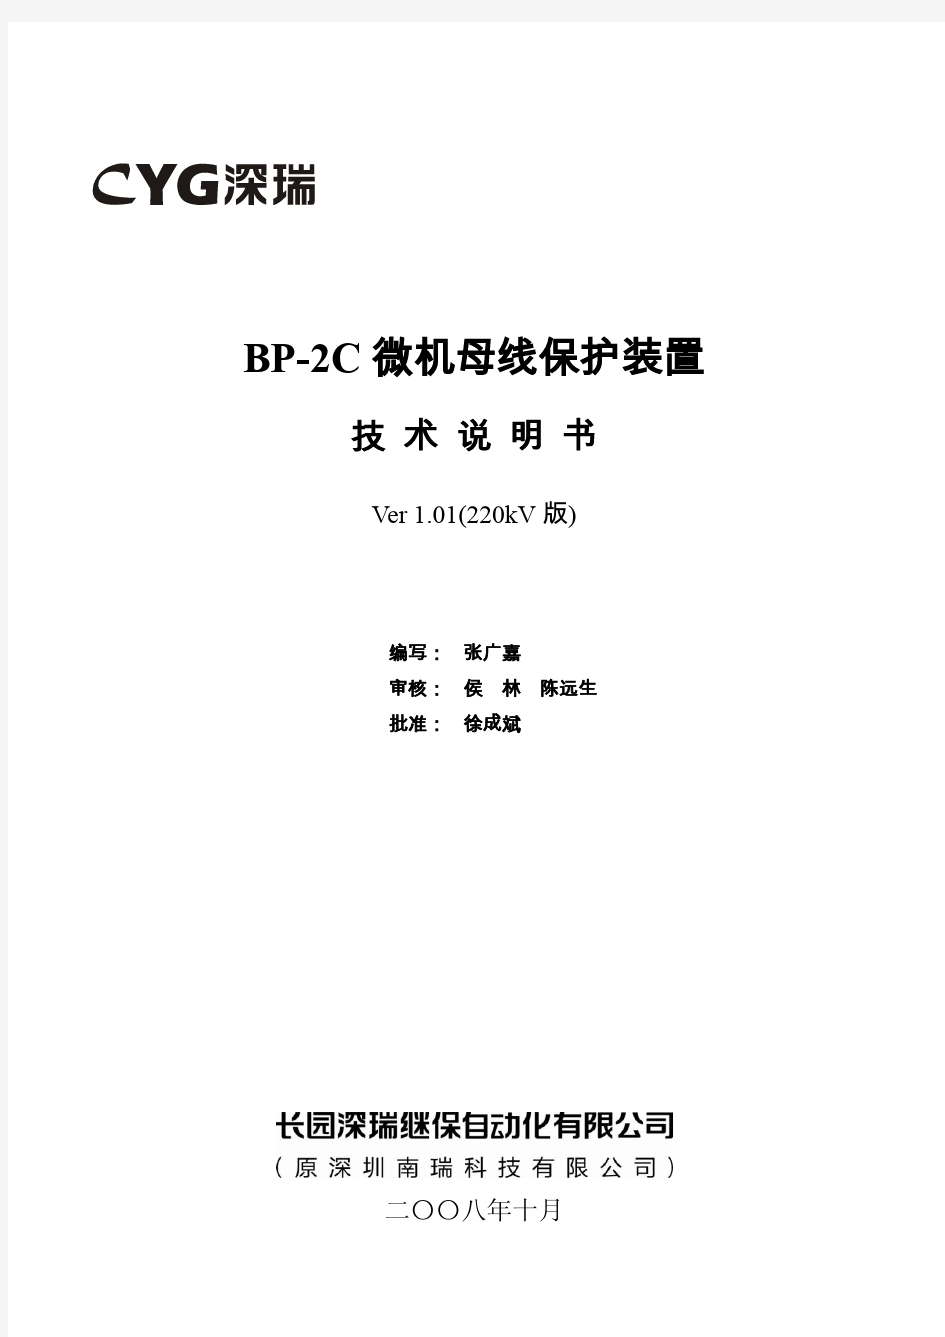 BP-2C微机母线保护装置技术说明书(220kV版)V1.01-081215